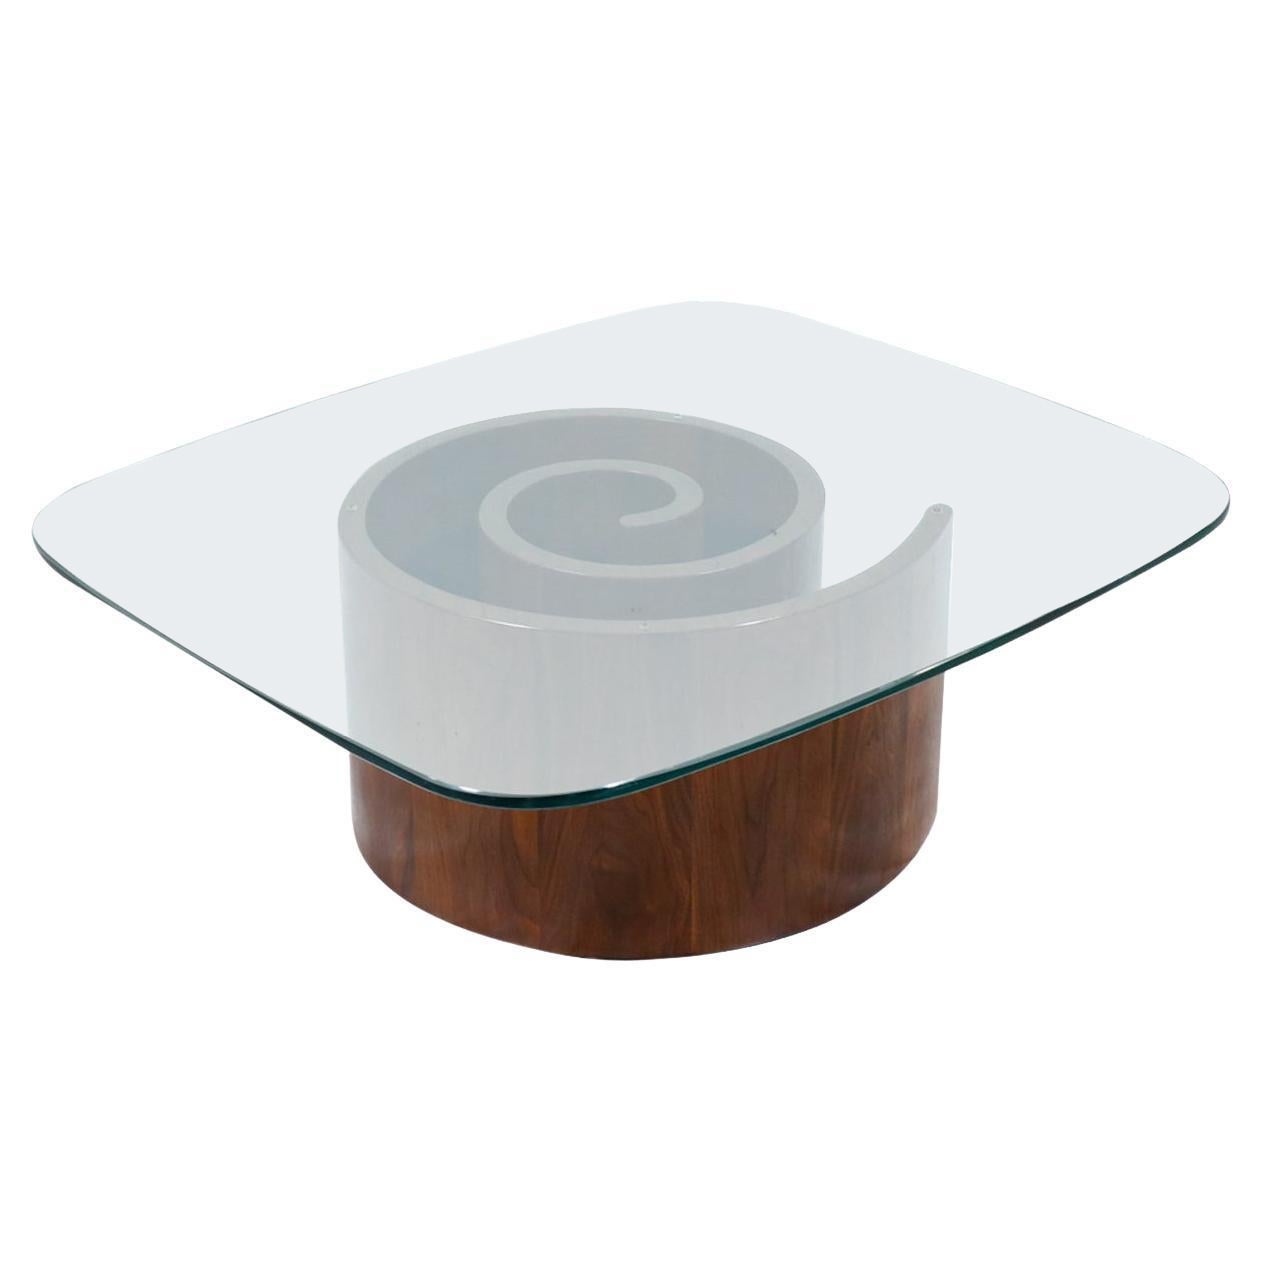 Vladimir Kagan “Snail” Coffee Table with Glass Top for Selig